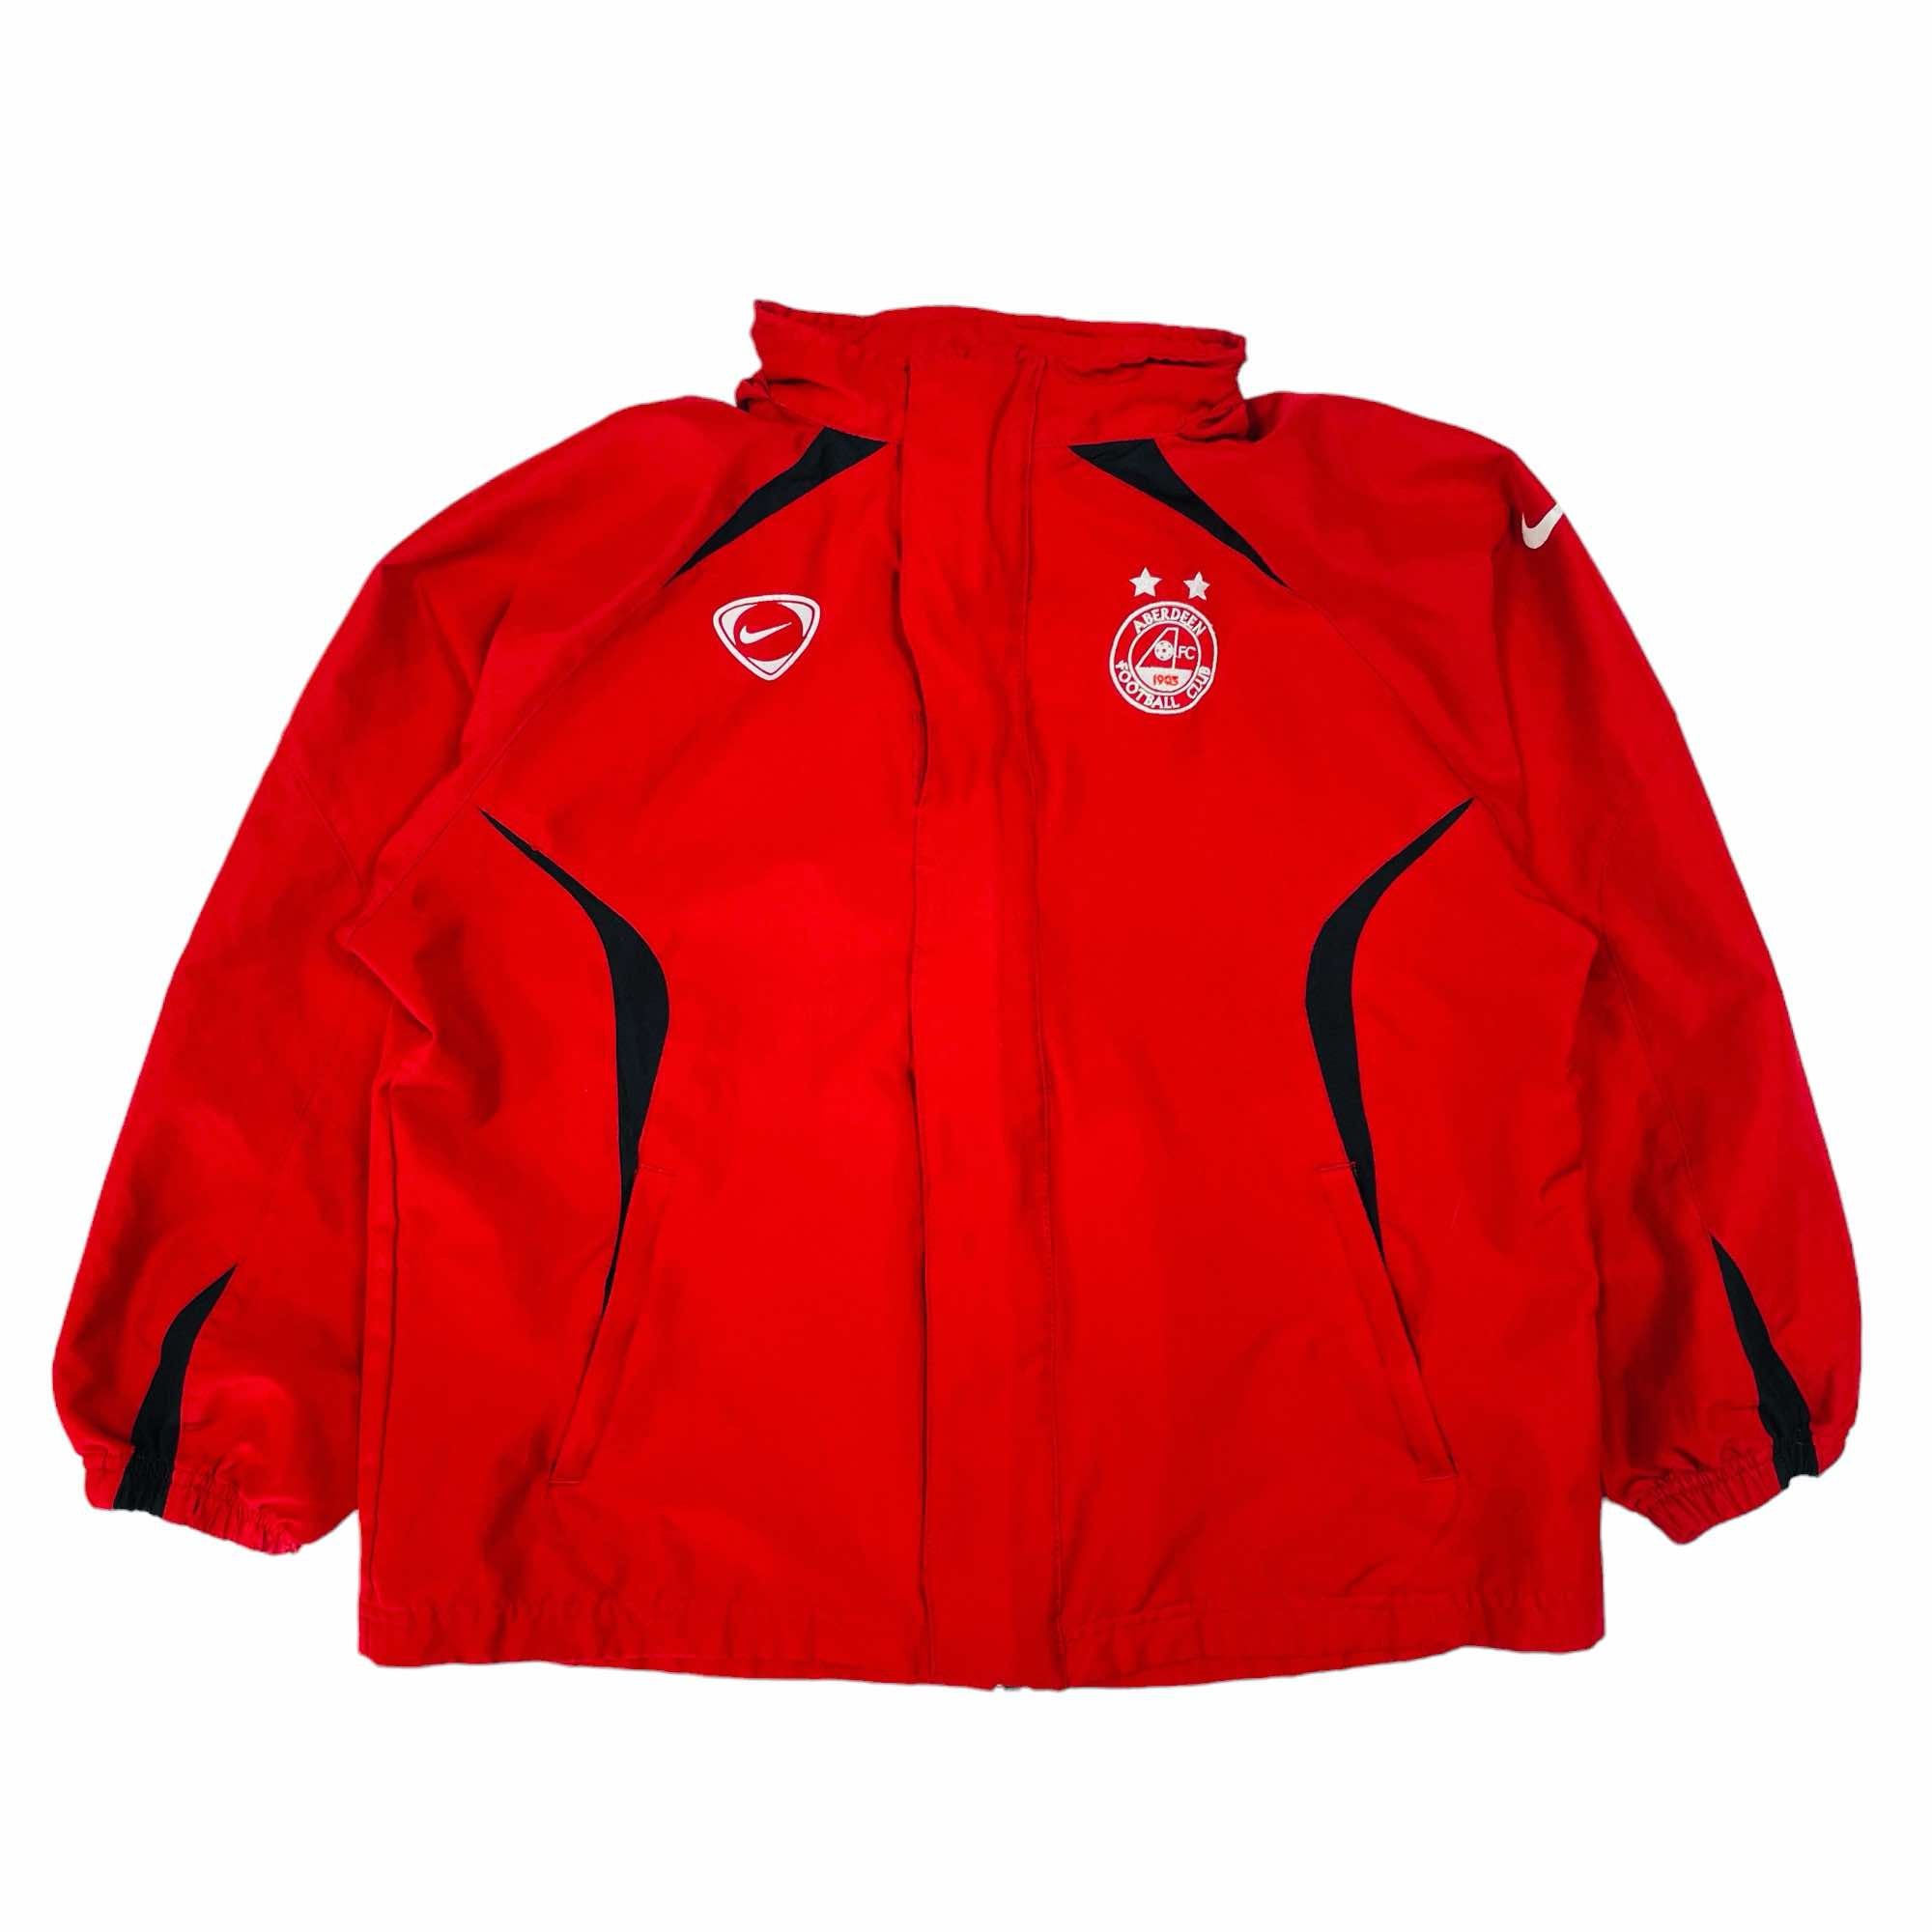 Aberdeen 2007/08 Nike Training Jacket - Small